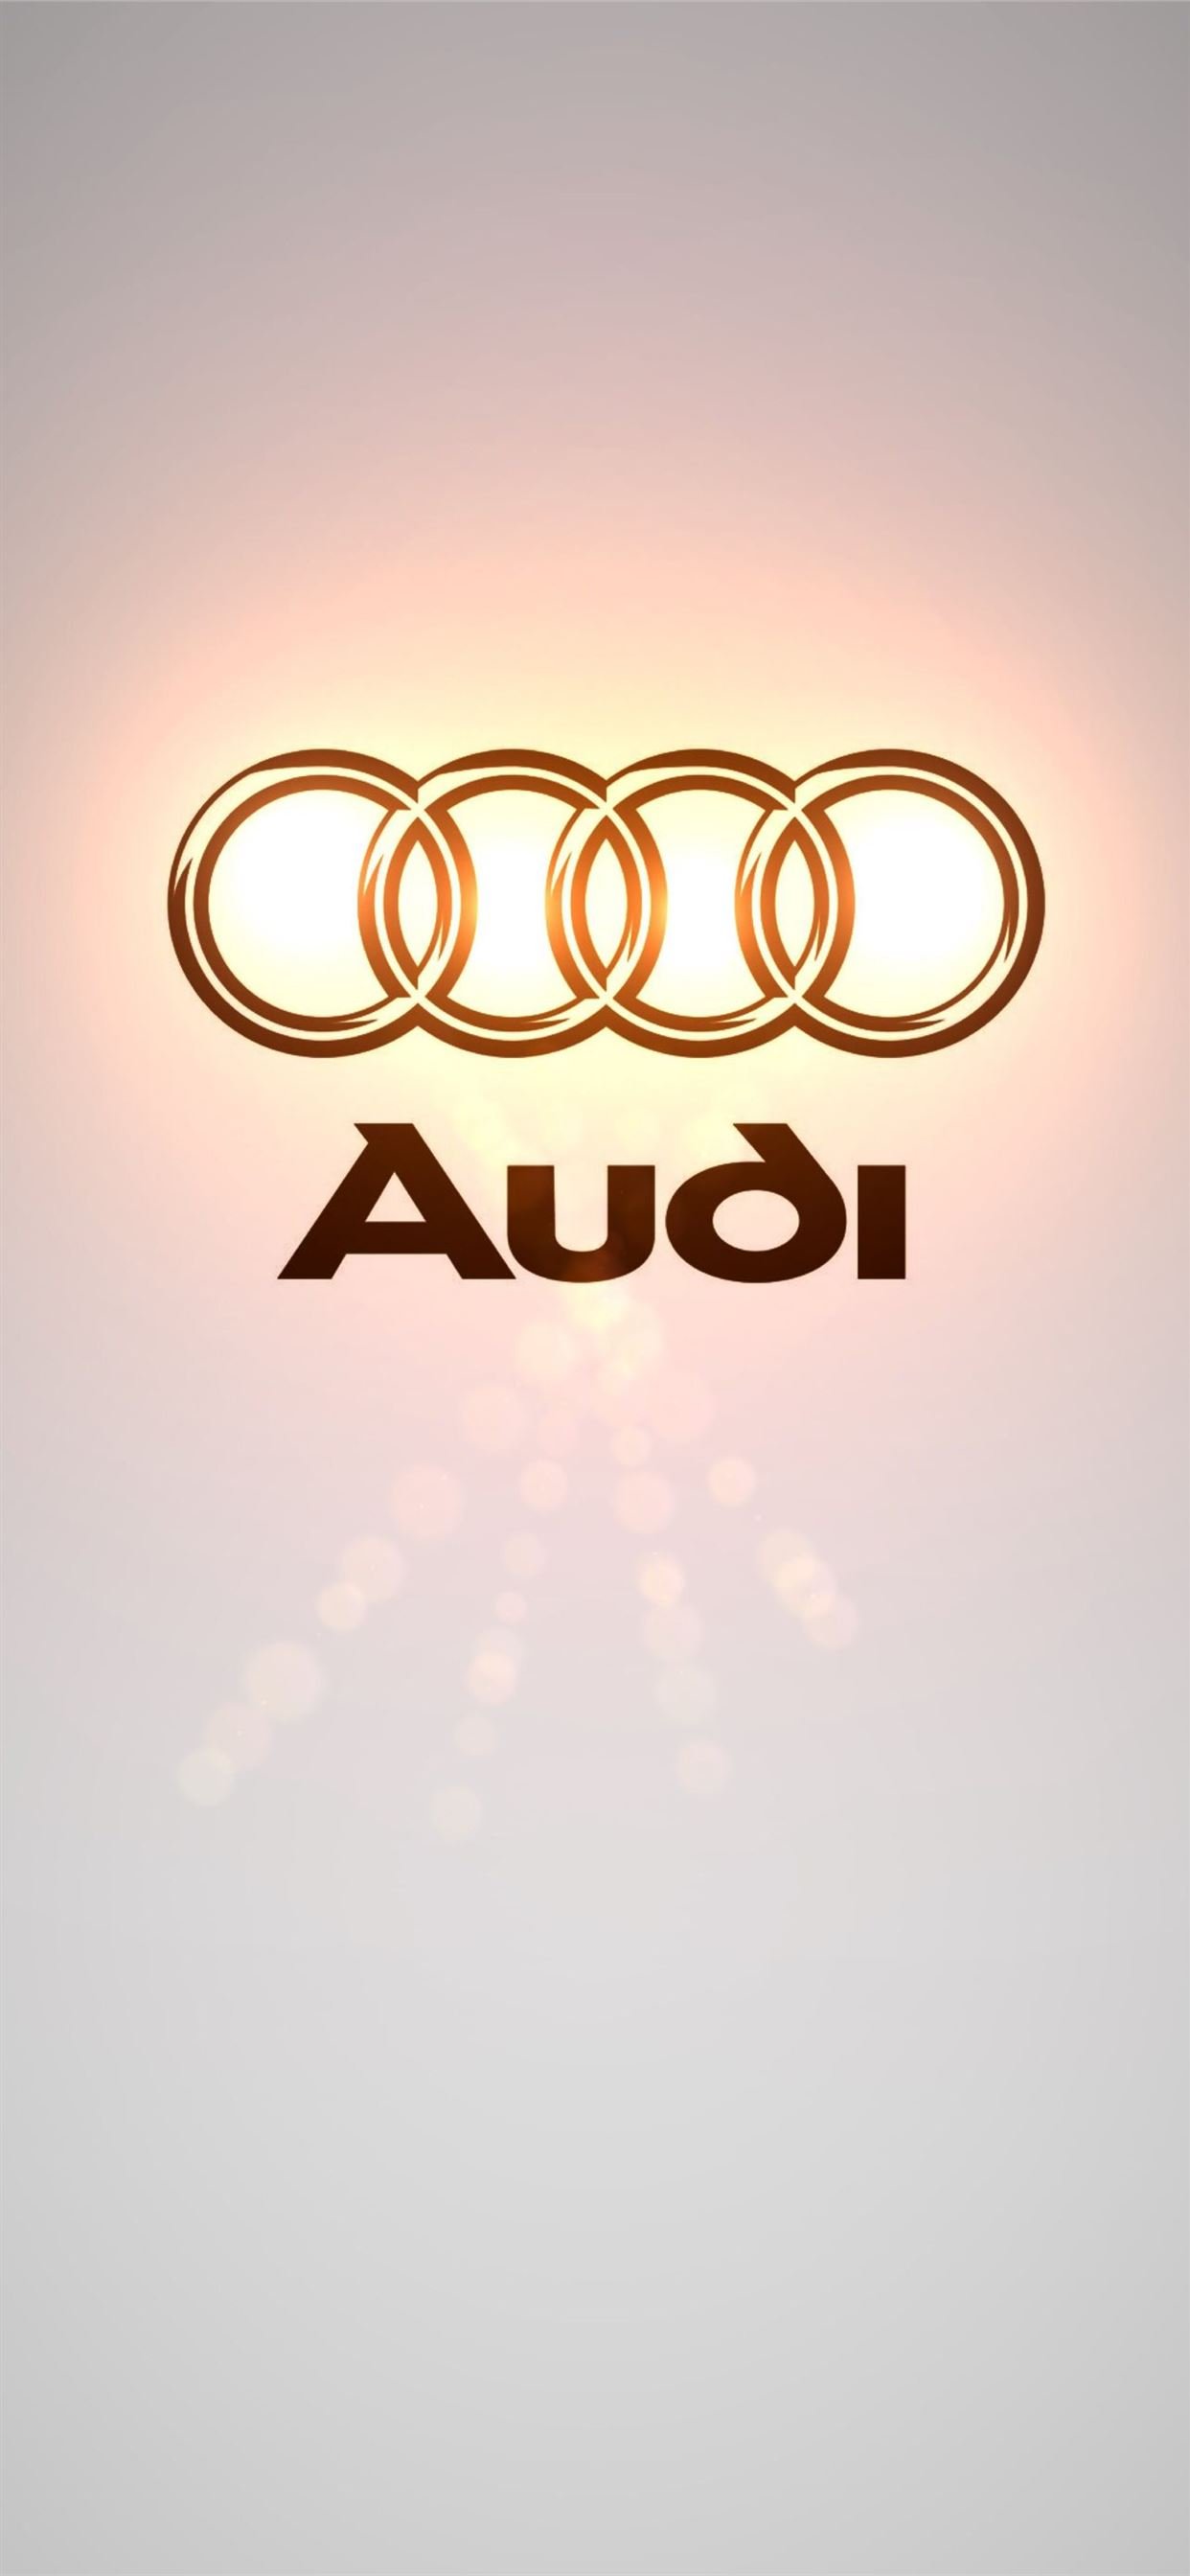 audi logo iPhone Wallpaper Free Download